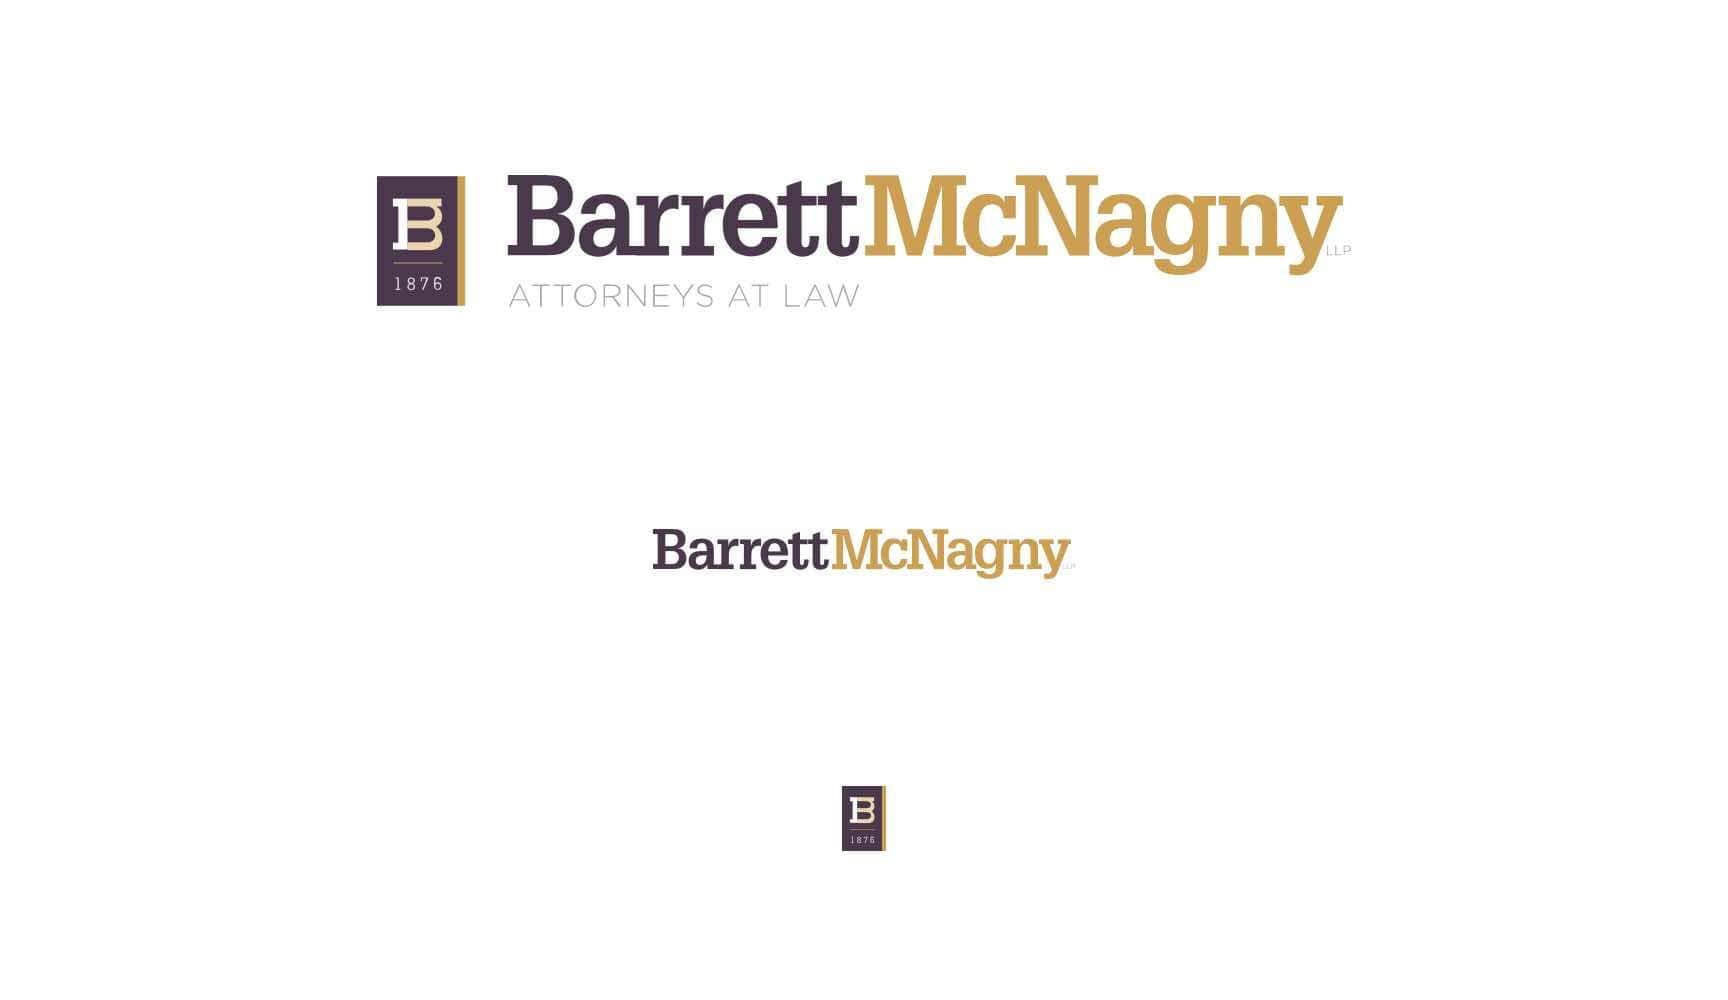 Barrett McNagny responsive logo example